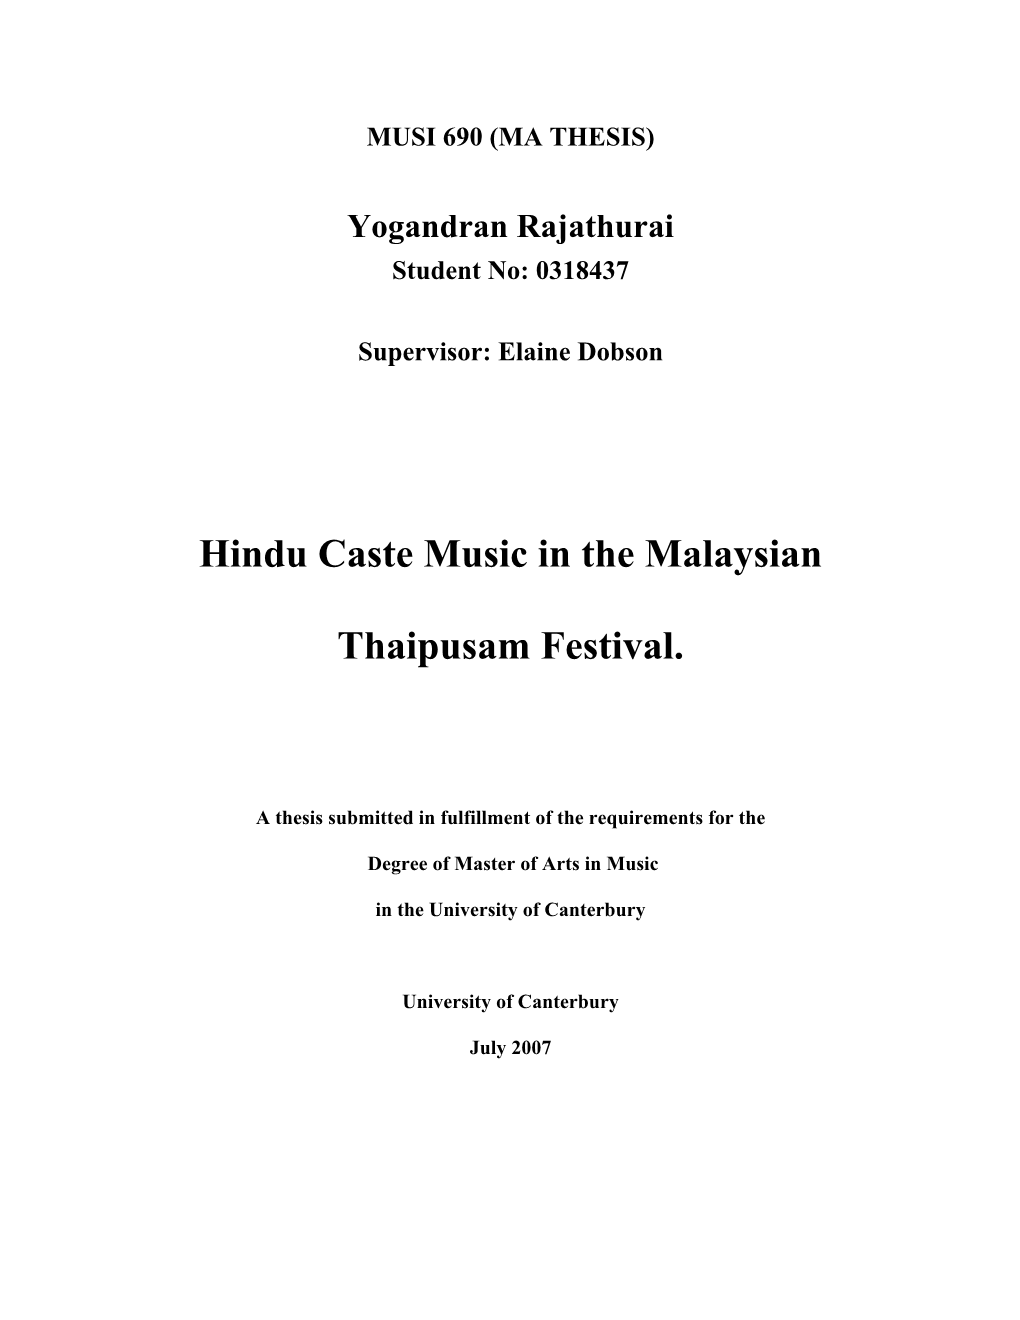 Hindu Caste Music in the Malaysian Thaipusam Festival